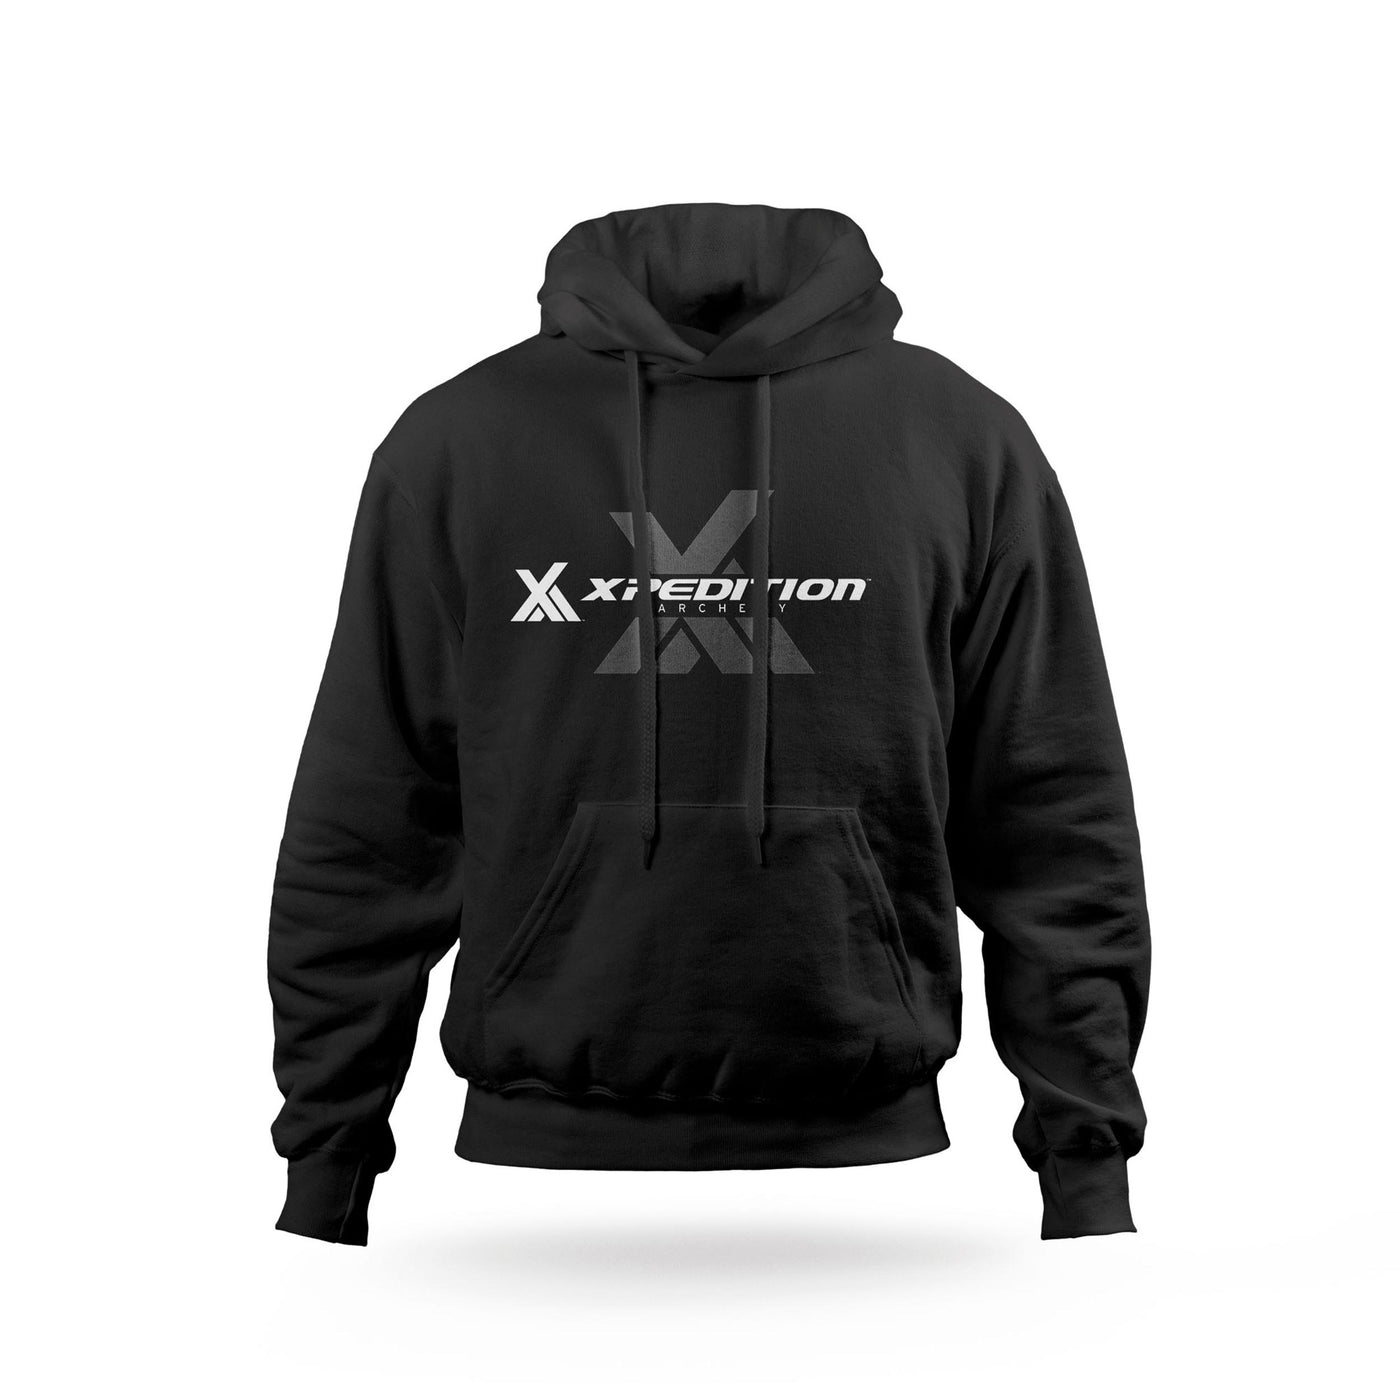 Xpedition Logo Black Hoodie